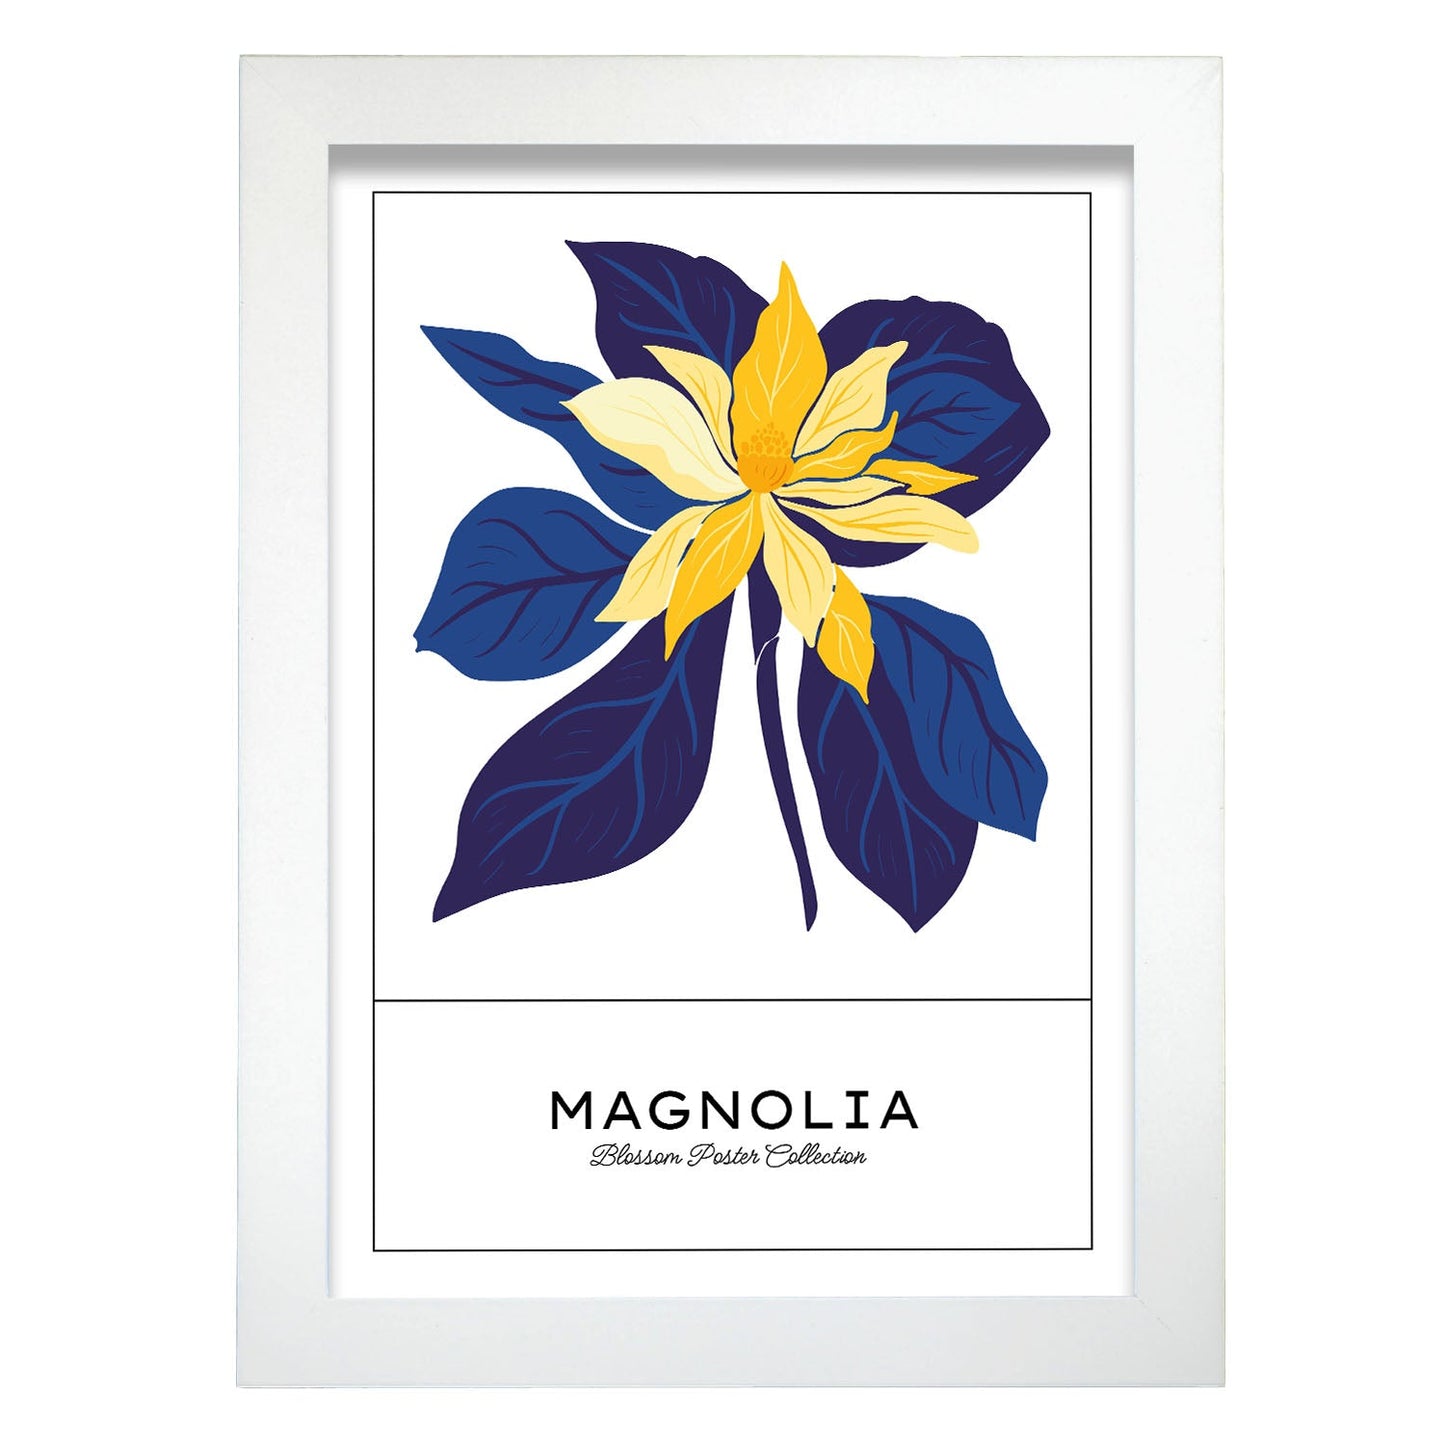 Magnolia Blue and Yellow-Artwork-Nacnic-A4-Marco Blanco-Nacnic Estudio SL